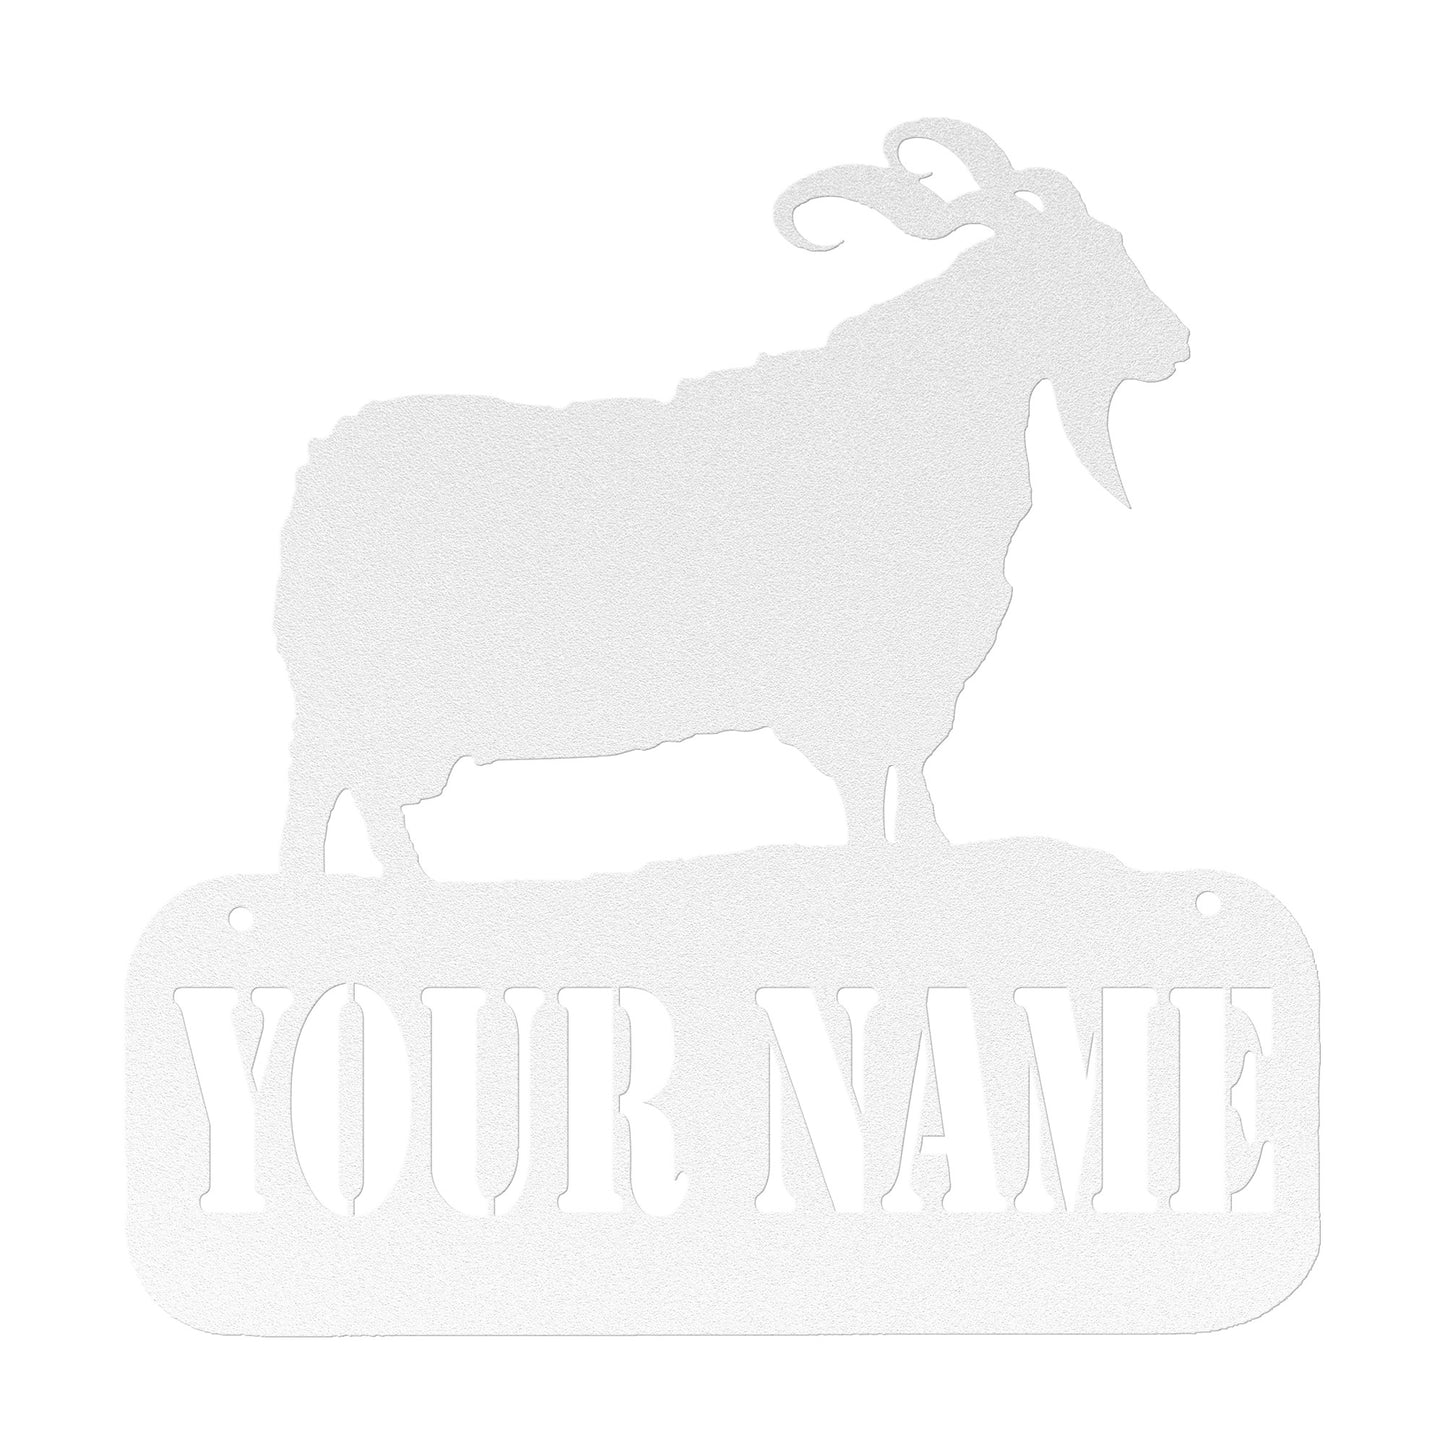 Customized Name or Farm Angora Goat Metal Art - 18 Guage Steel - Powder Coated and Weatherproof - Livestock Show Animals